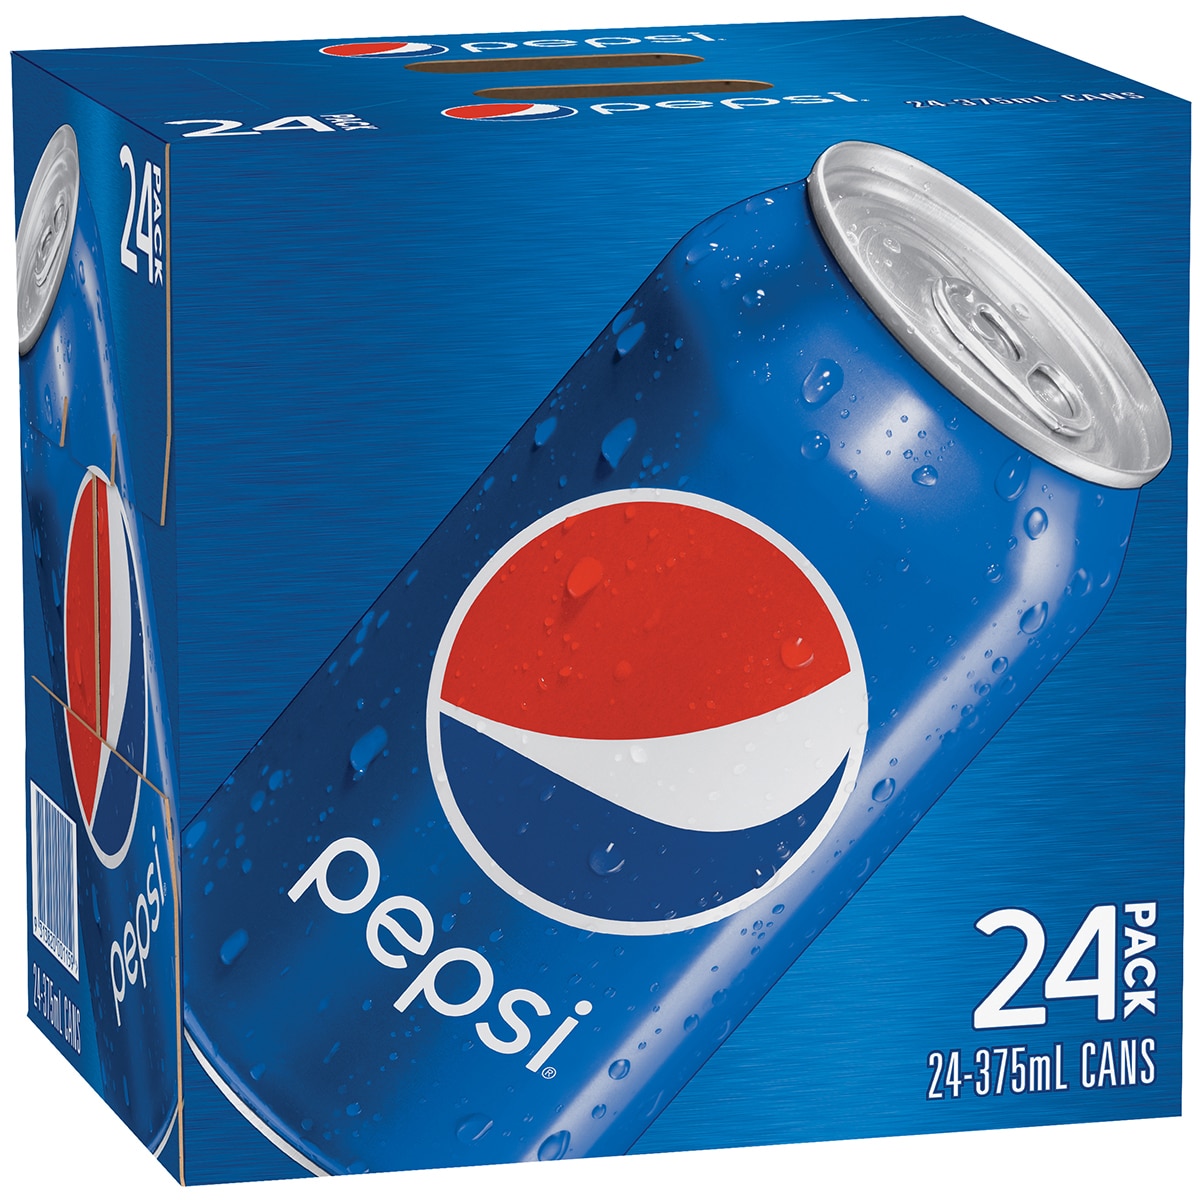 Pepsi 24 x 375ml